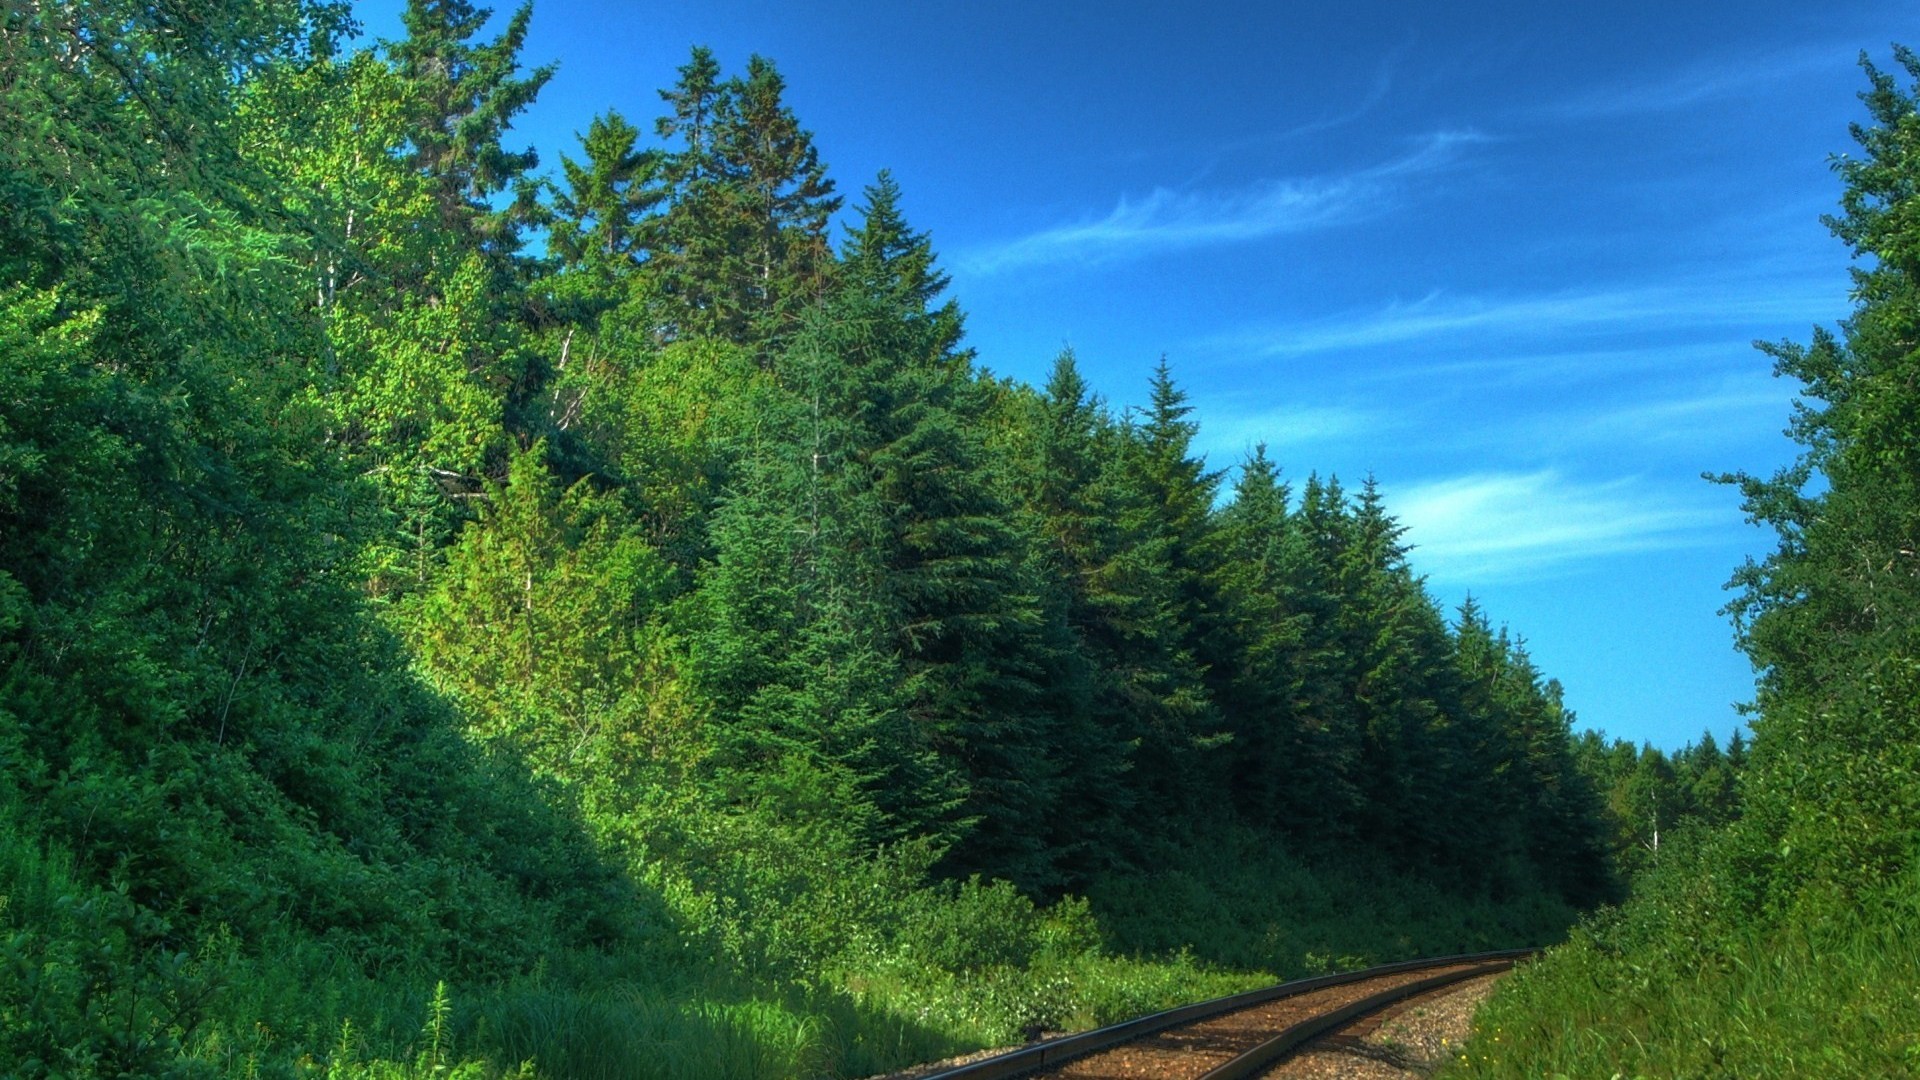 trees, forests, railroads - desktop wallpaper